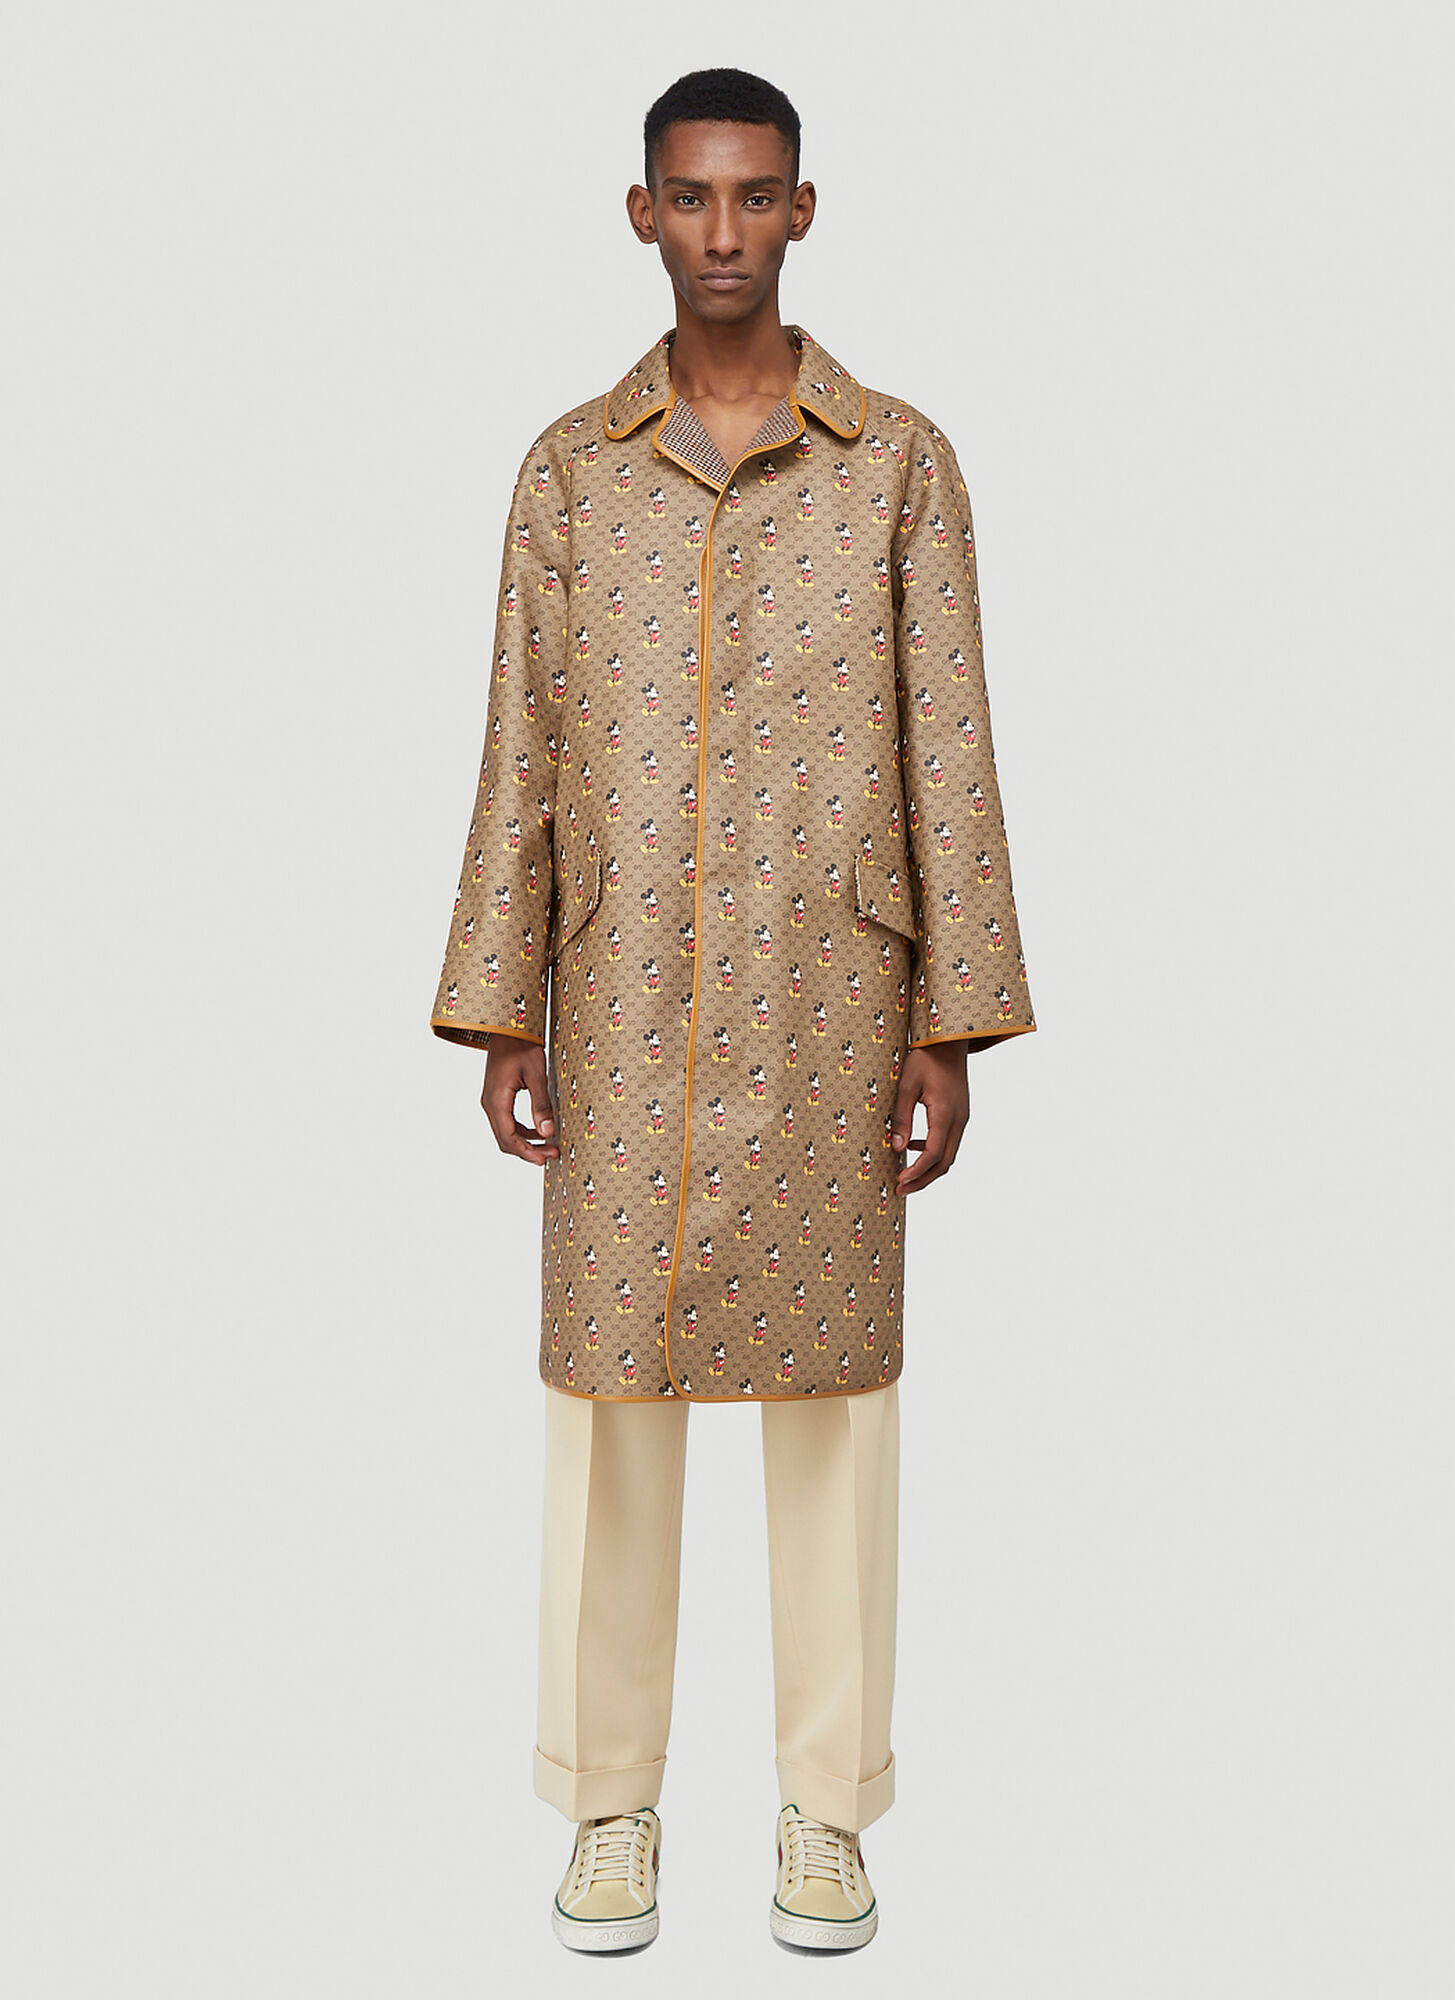 Gucci X Disney Reversible Coat in Beige size IT - 48 | The Fashionisto